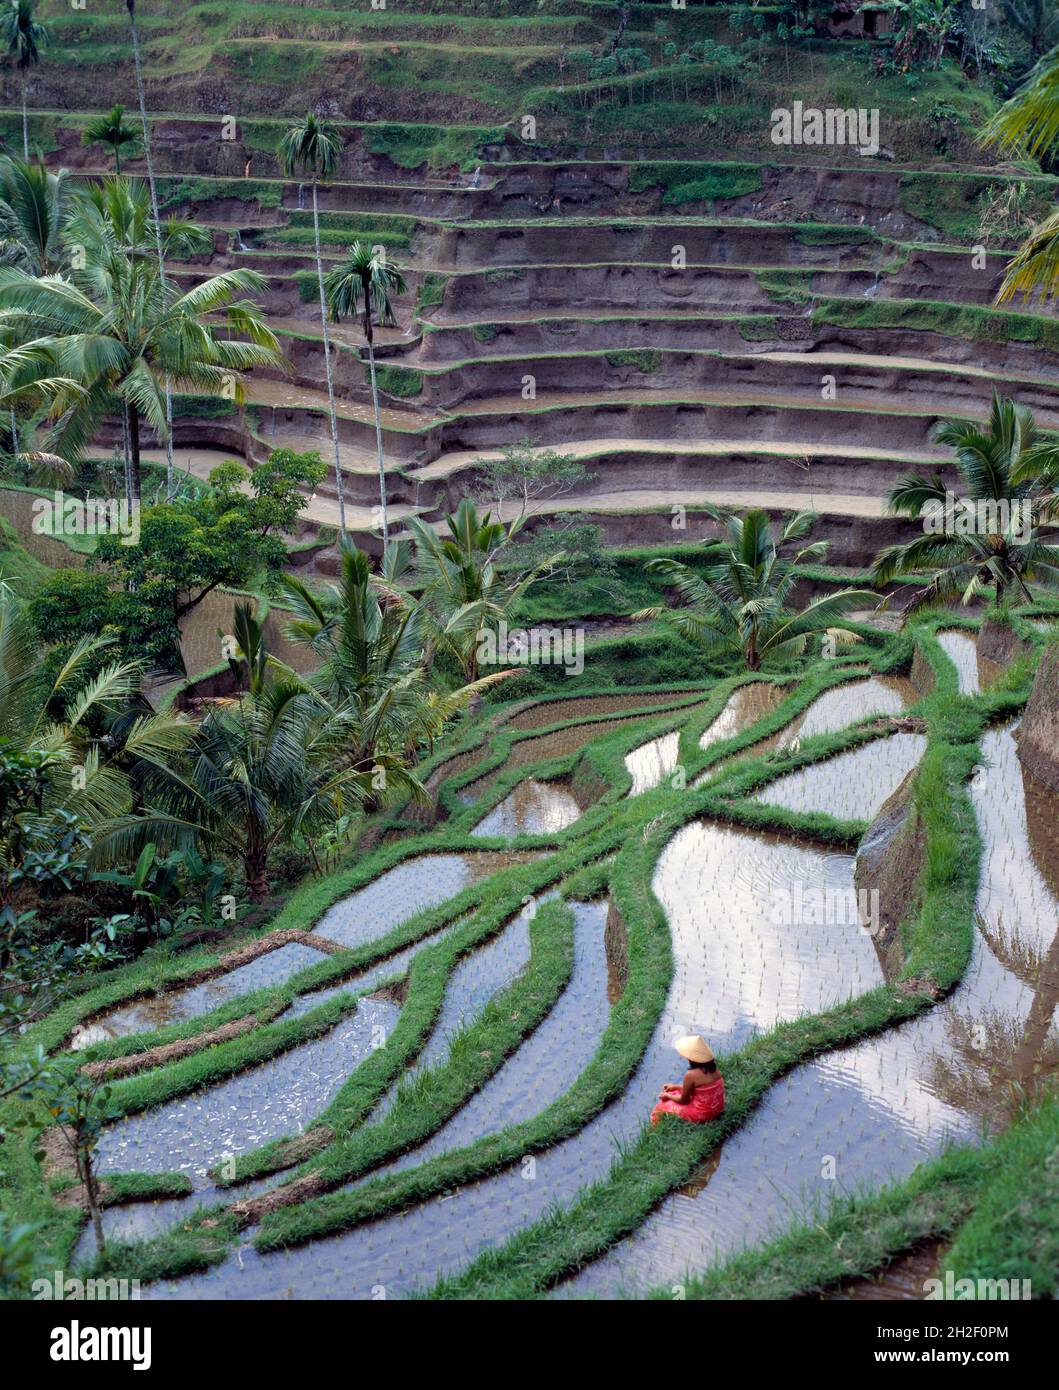 Indonesia. Bali Island. Agriculture. Rice terraces near Ubud. Stock Photo